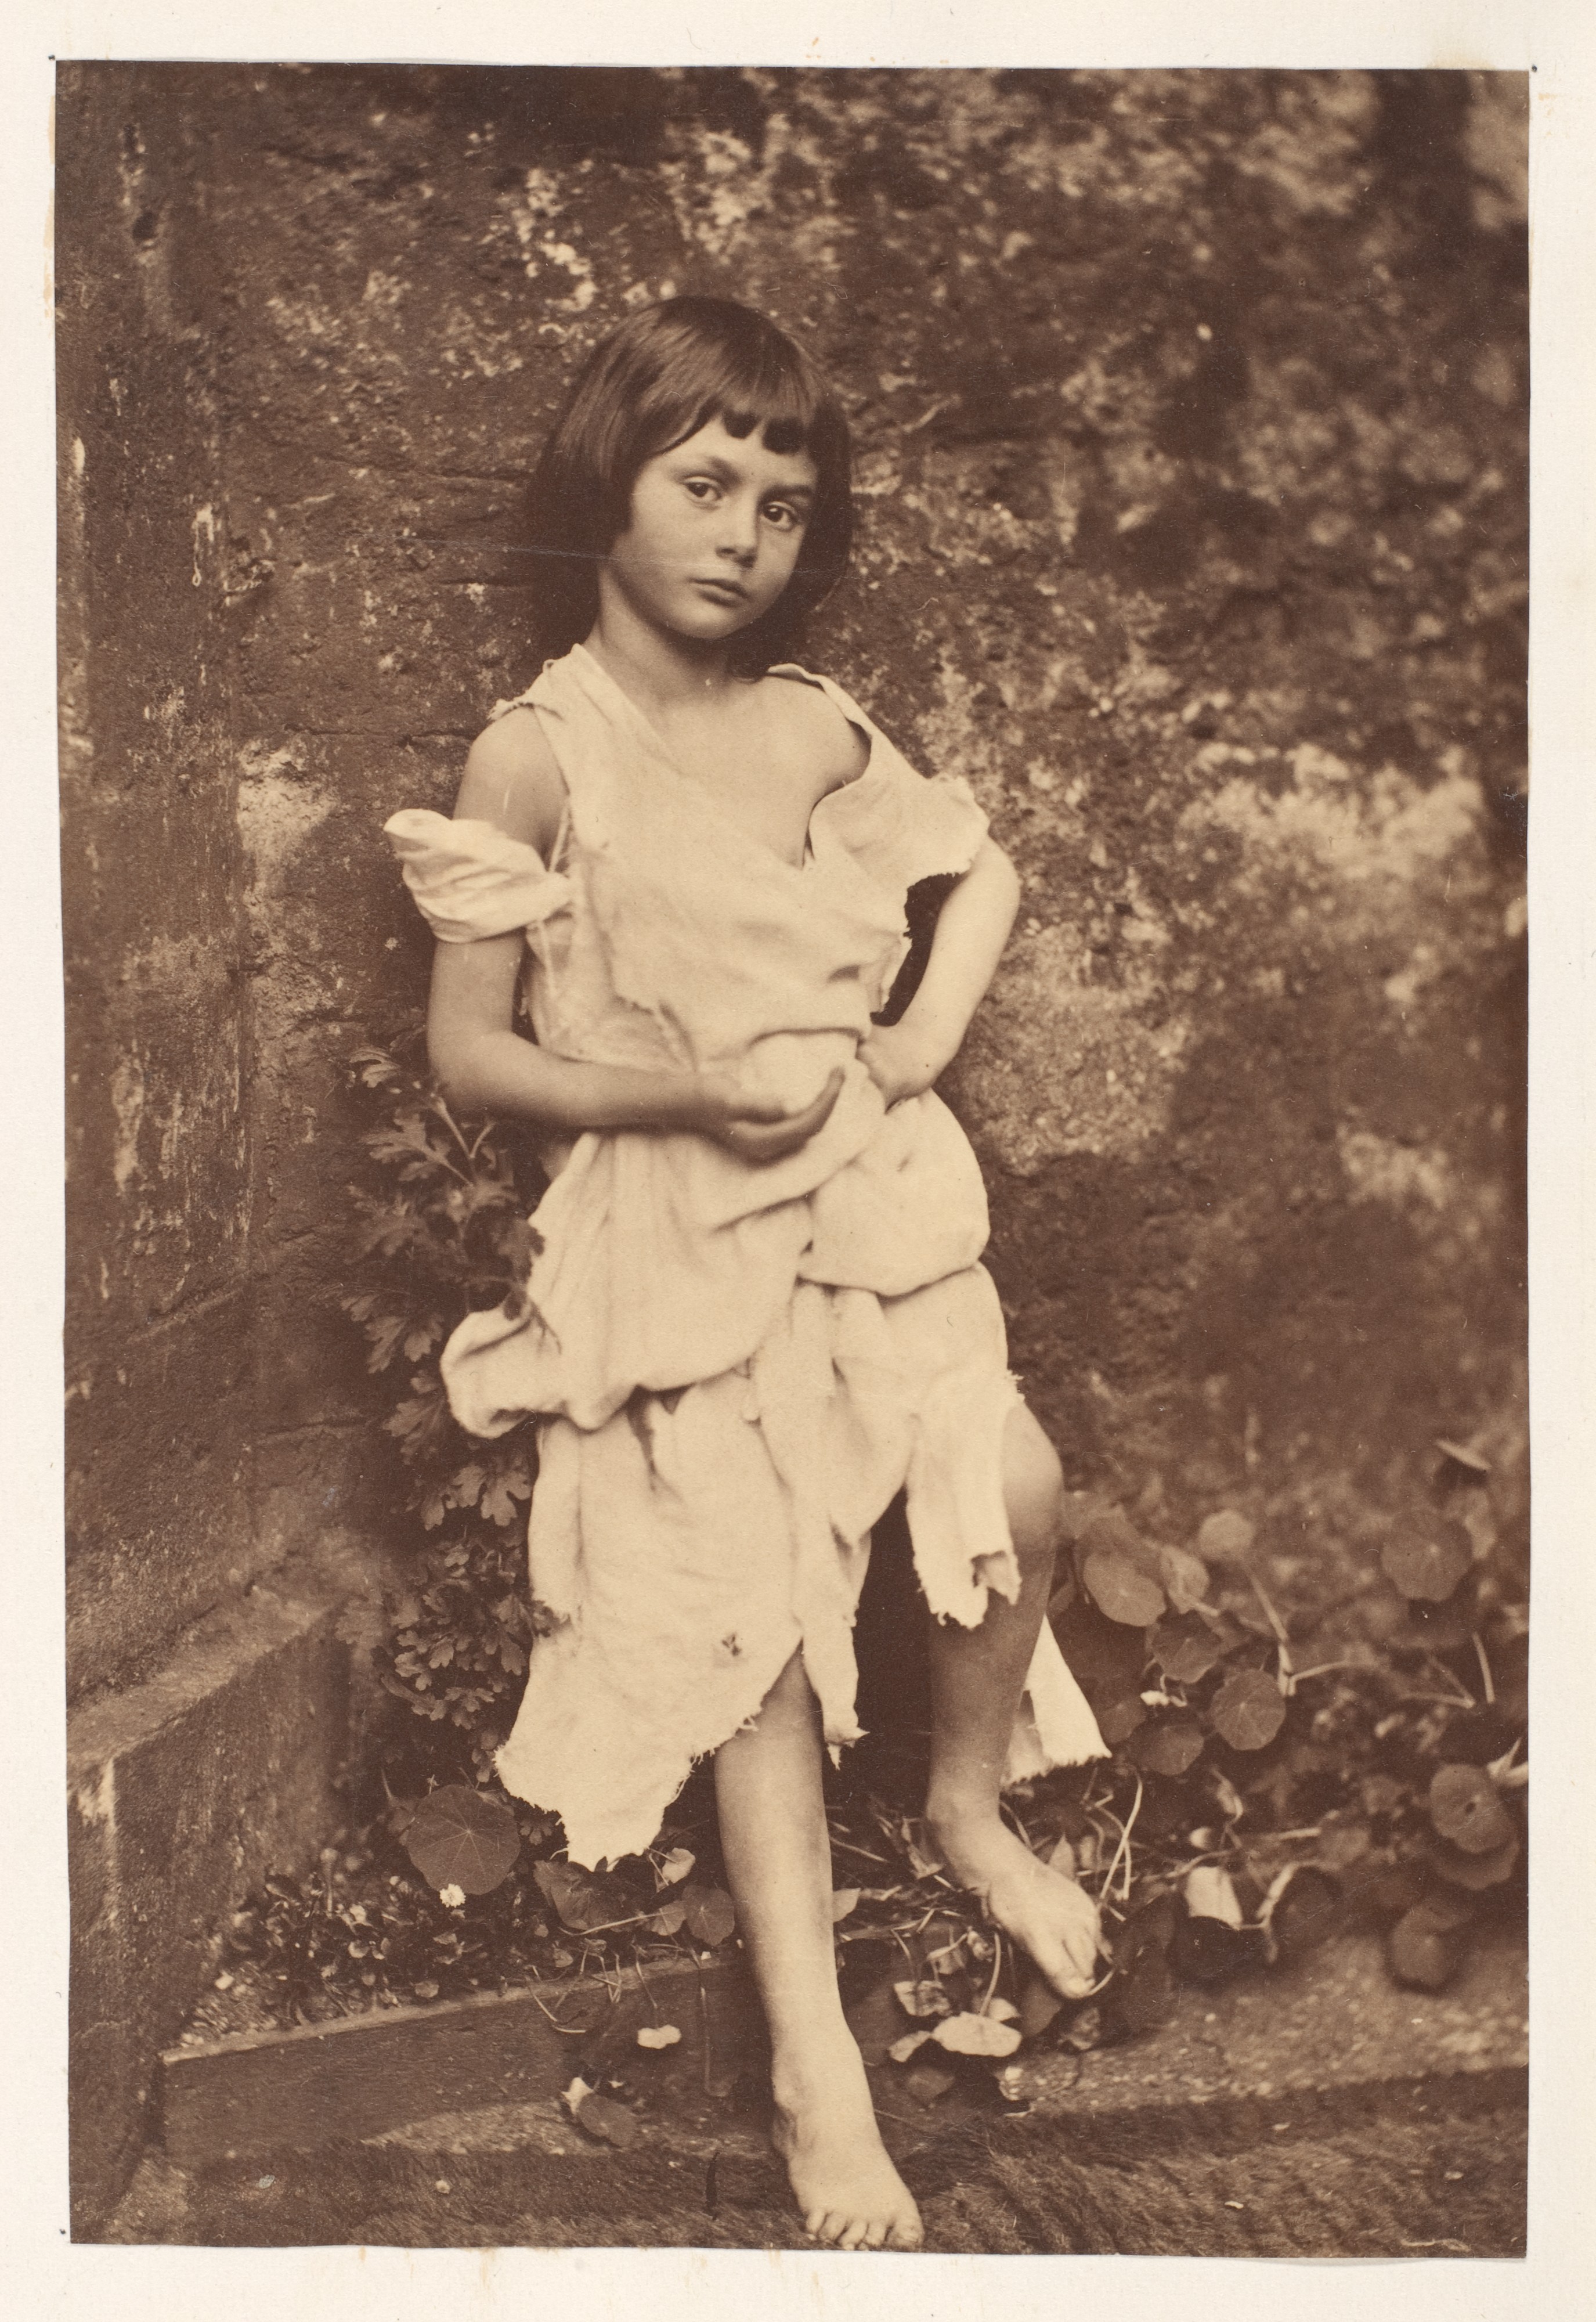 Alice Pleasance Liddell by Lewis Carroll - 1858 - 6.3 x 10.9 cm Metropolitan Museum of Art